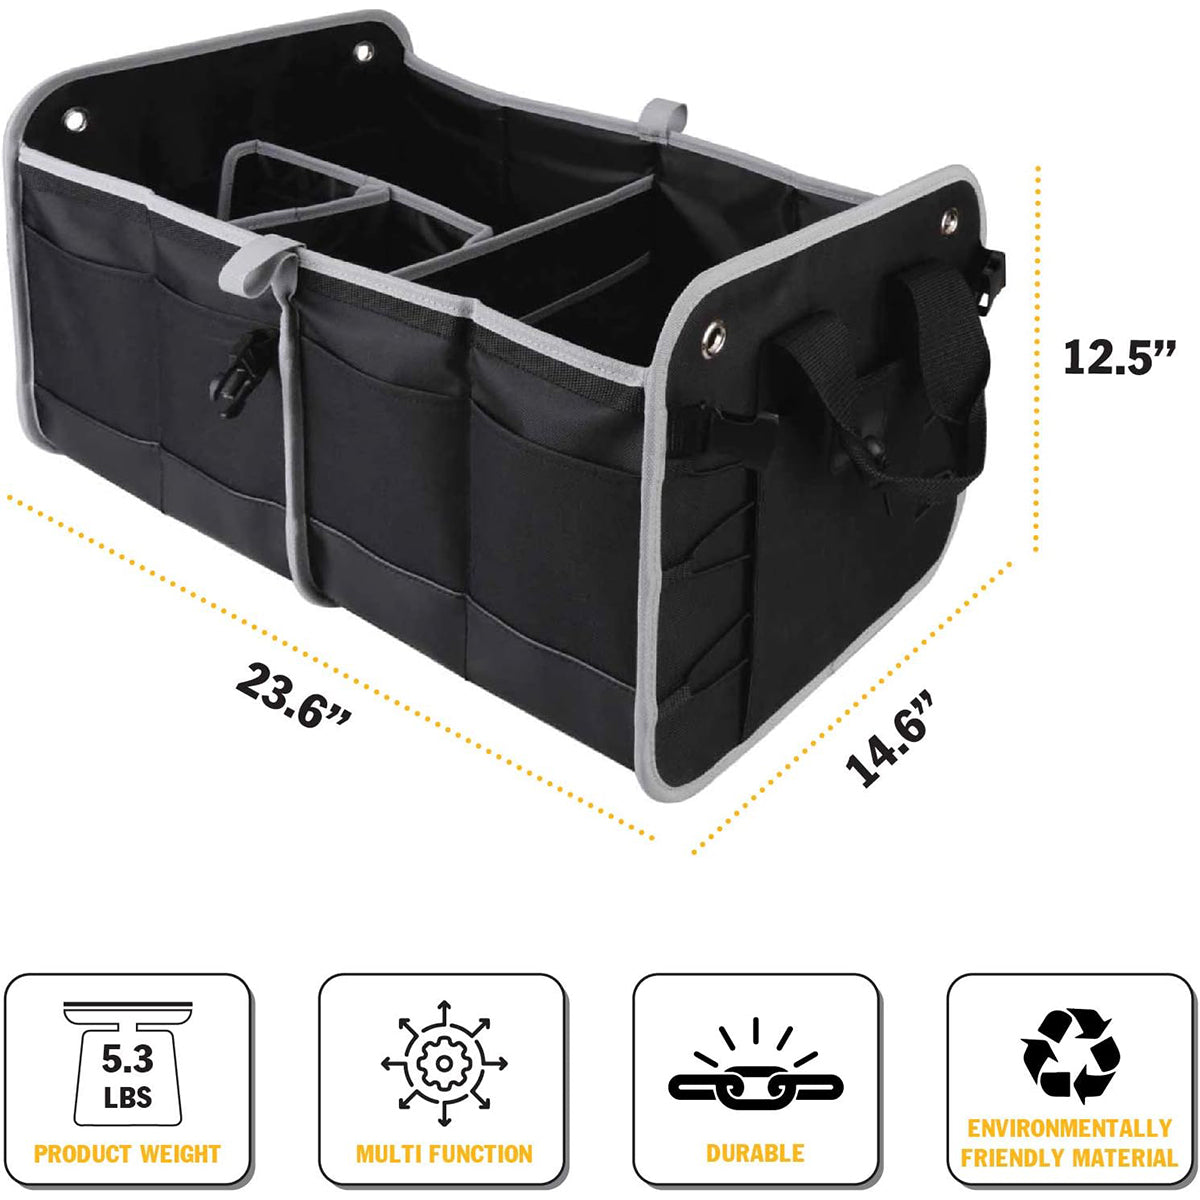 23" Foldable Trunk Organizer For Car Storage - Non Slip Bottom, Securing Straps